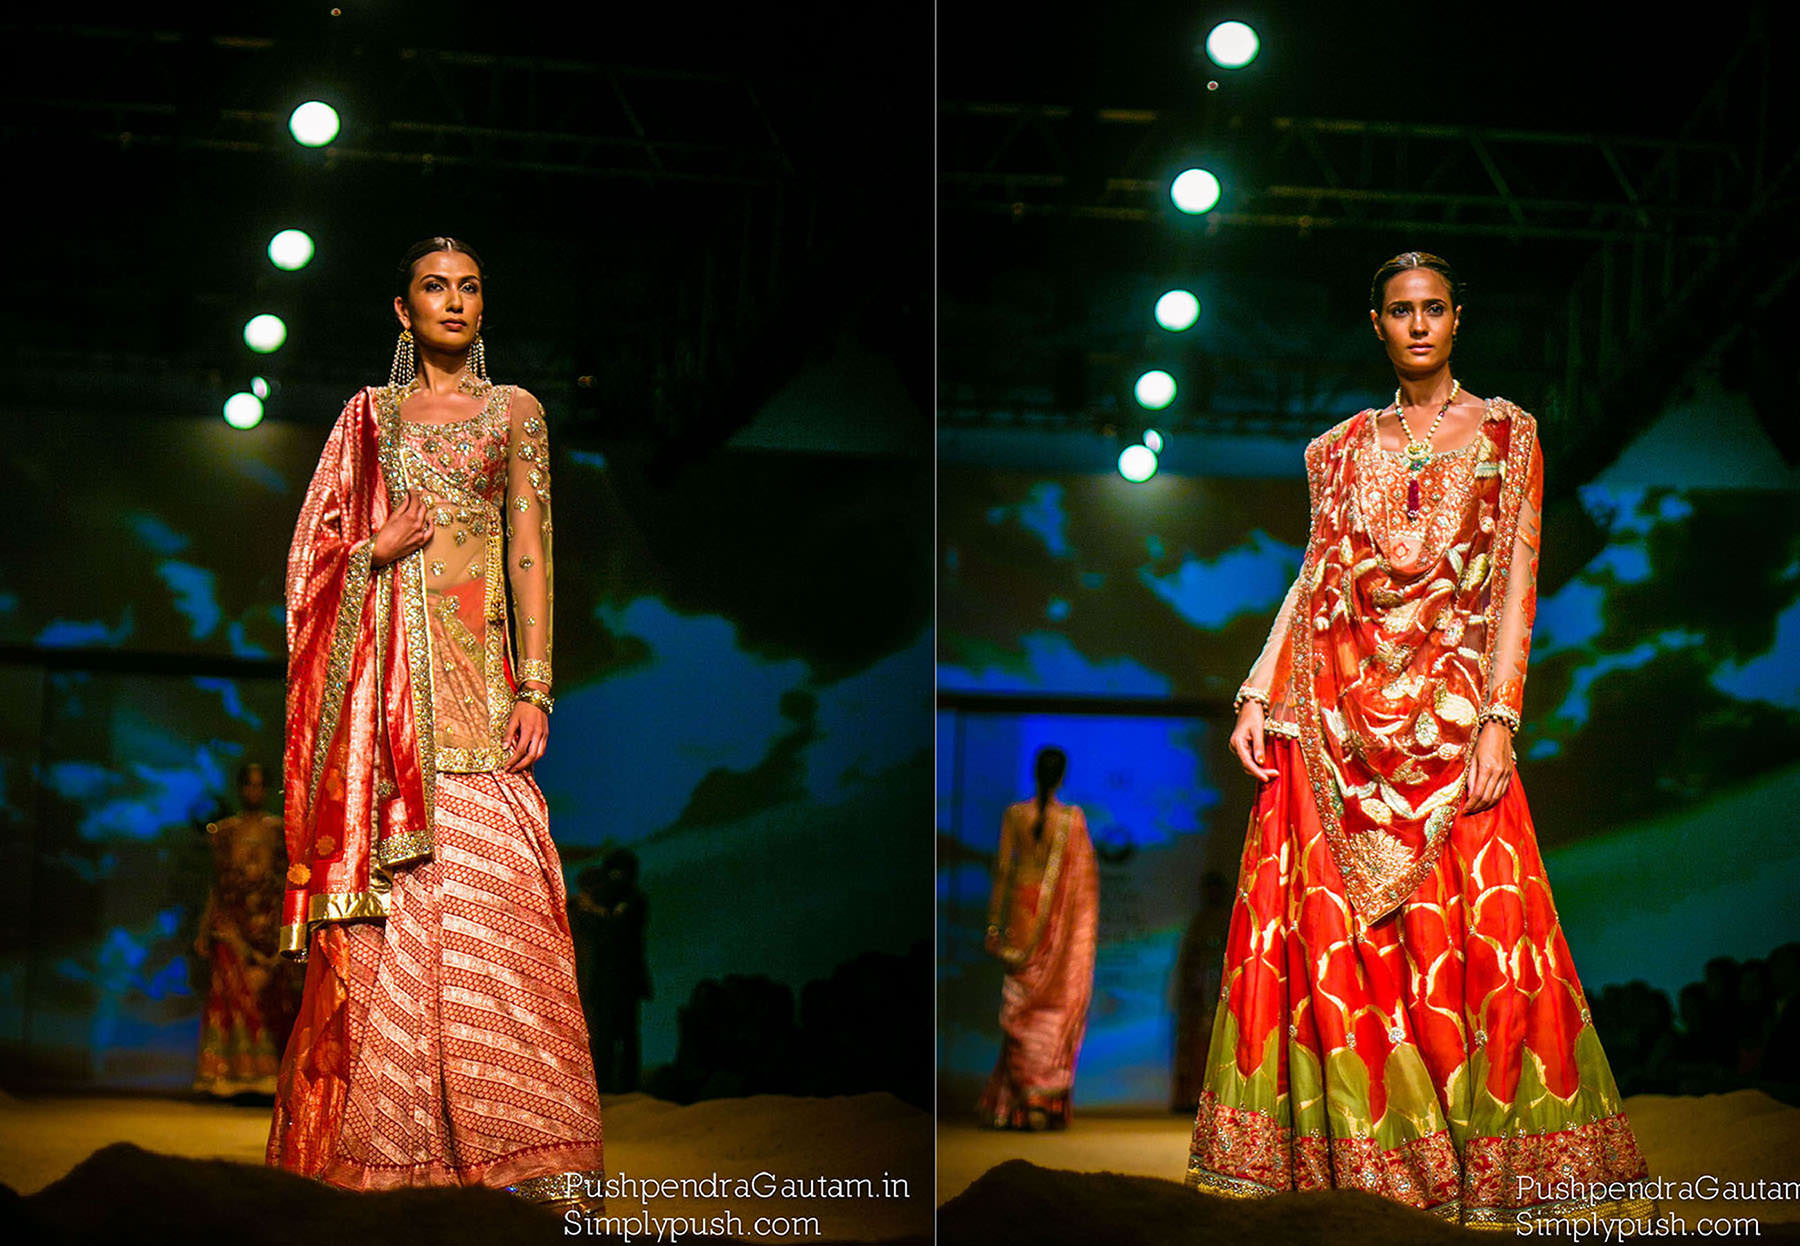 Ashima-Leena-Delhi-Fashion-Show-india-bridal-fashion-week-pushpendragautam-pics-fashion-event-lifestyle-photographer-india